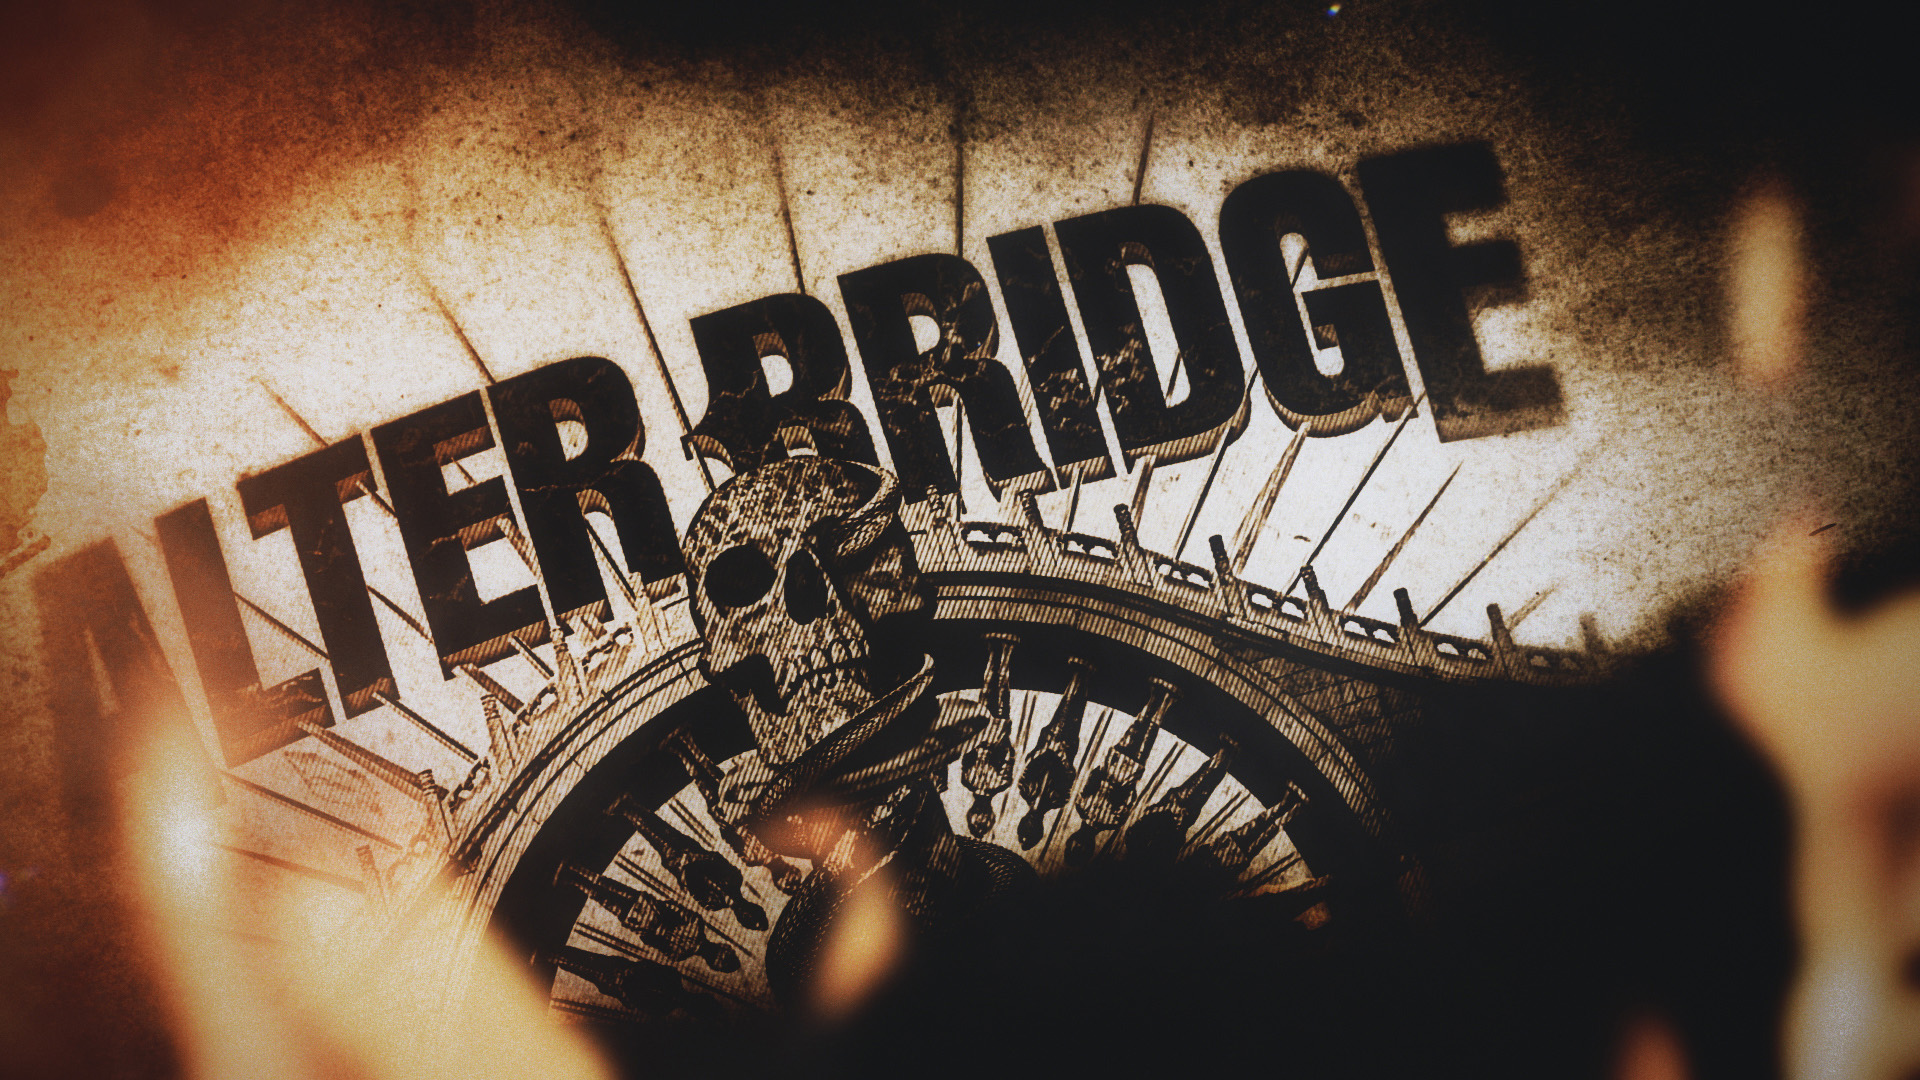 Alter Bridge revela el sigle ‘Pawns & Kings’ y anuncia disco